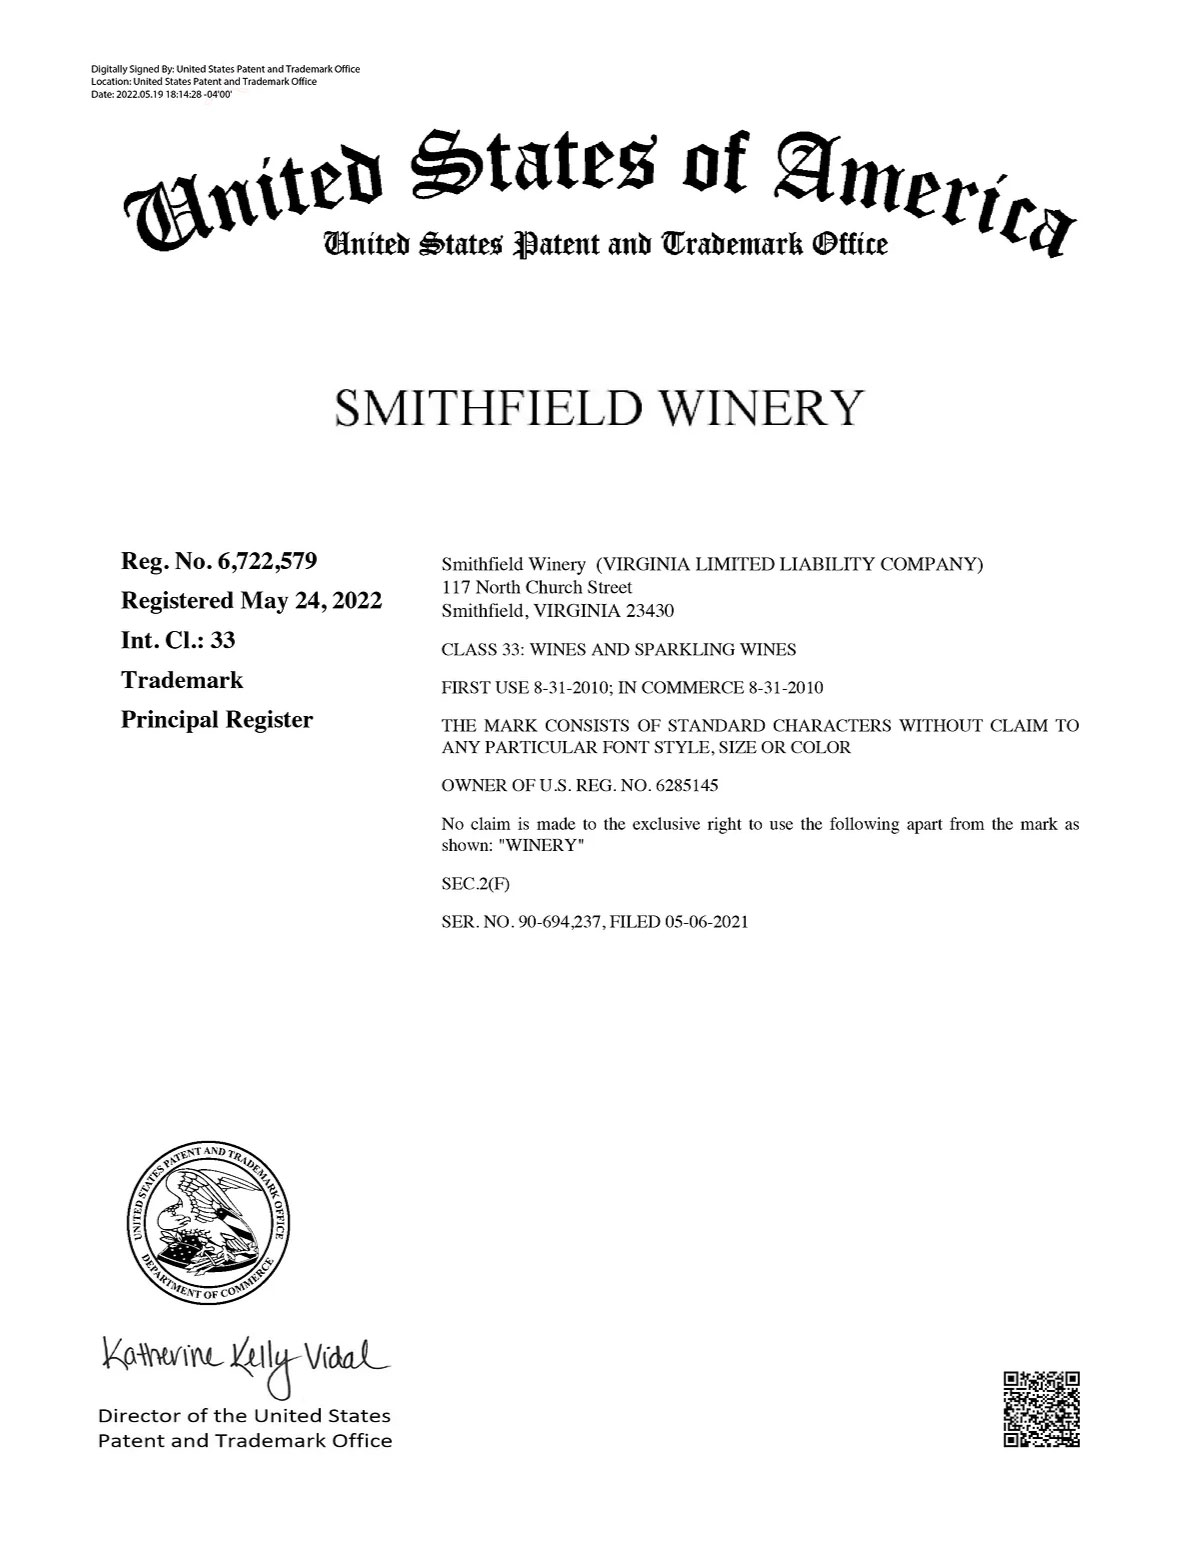 Smithfield Trademark